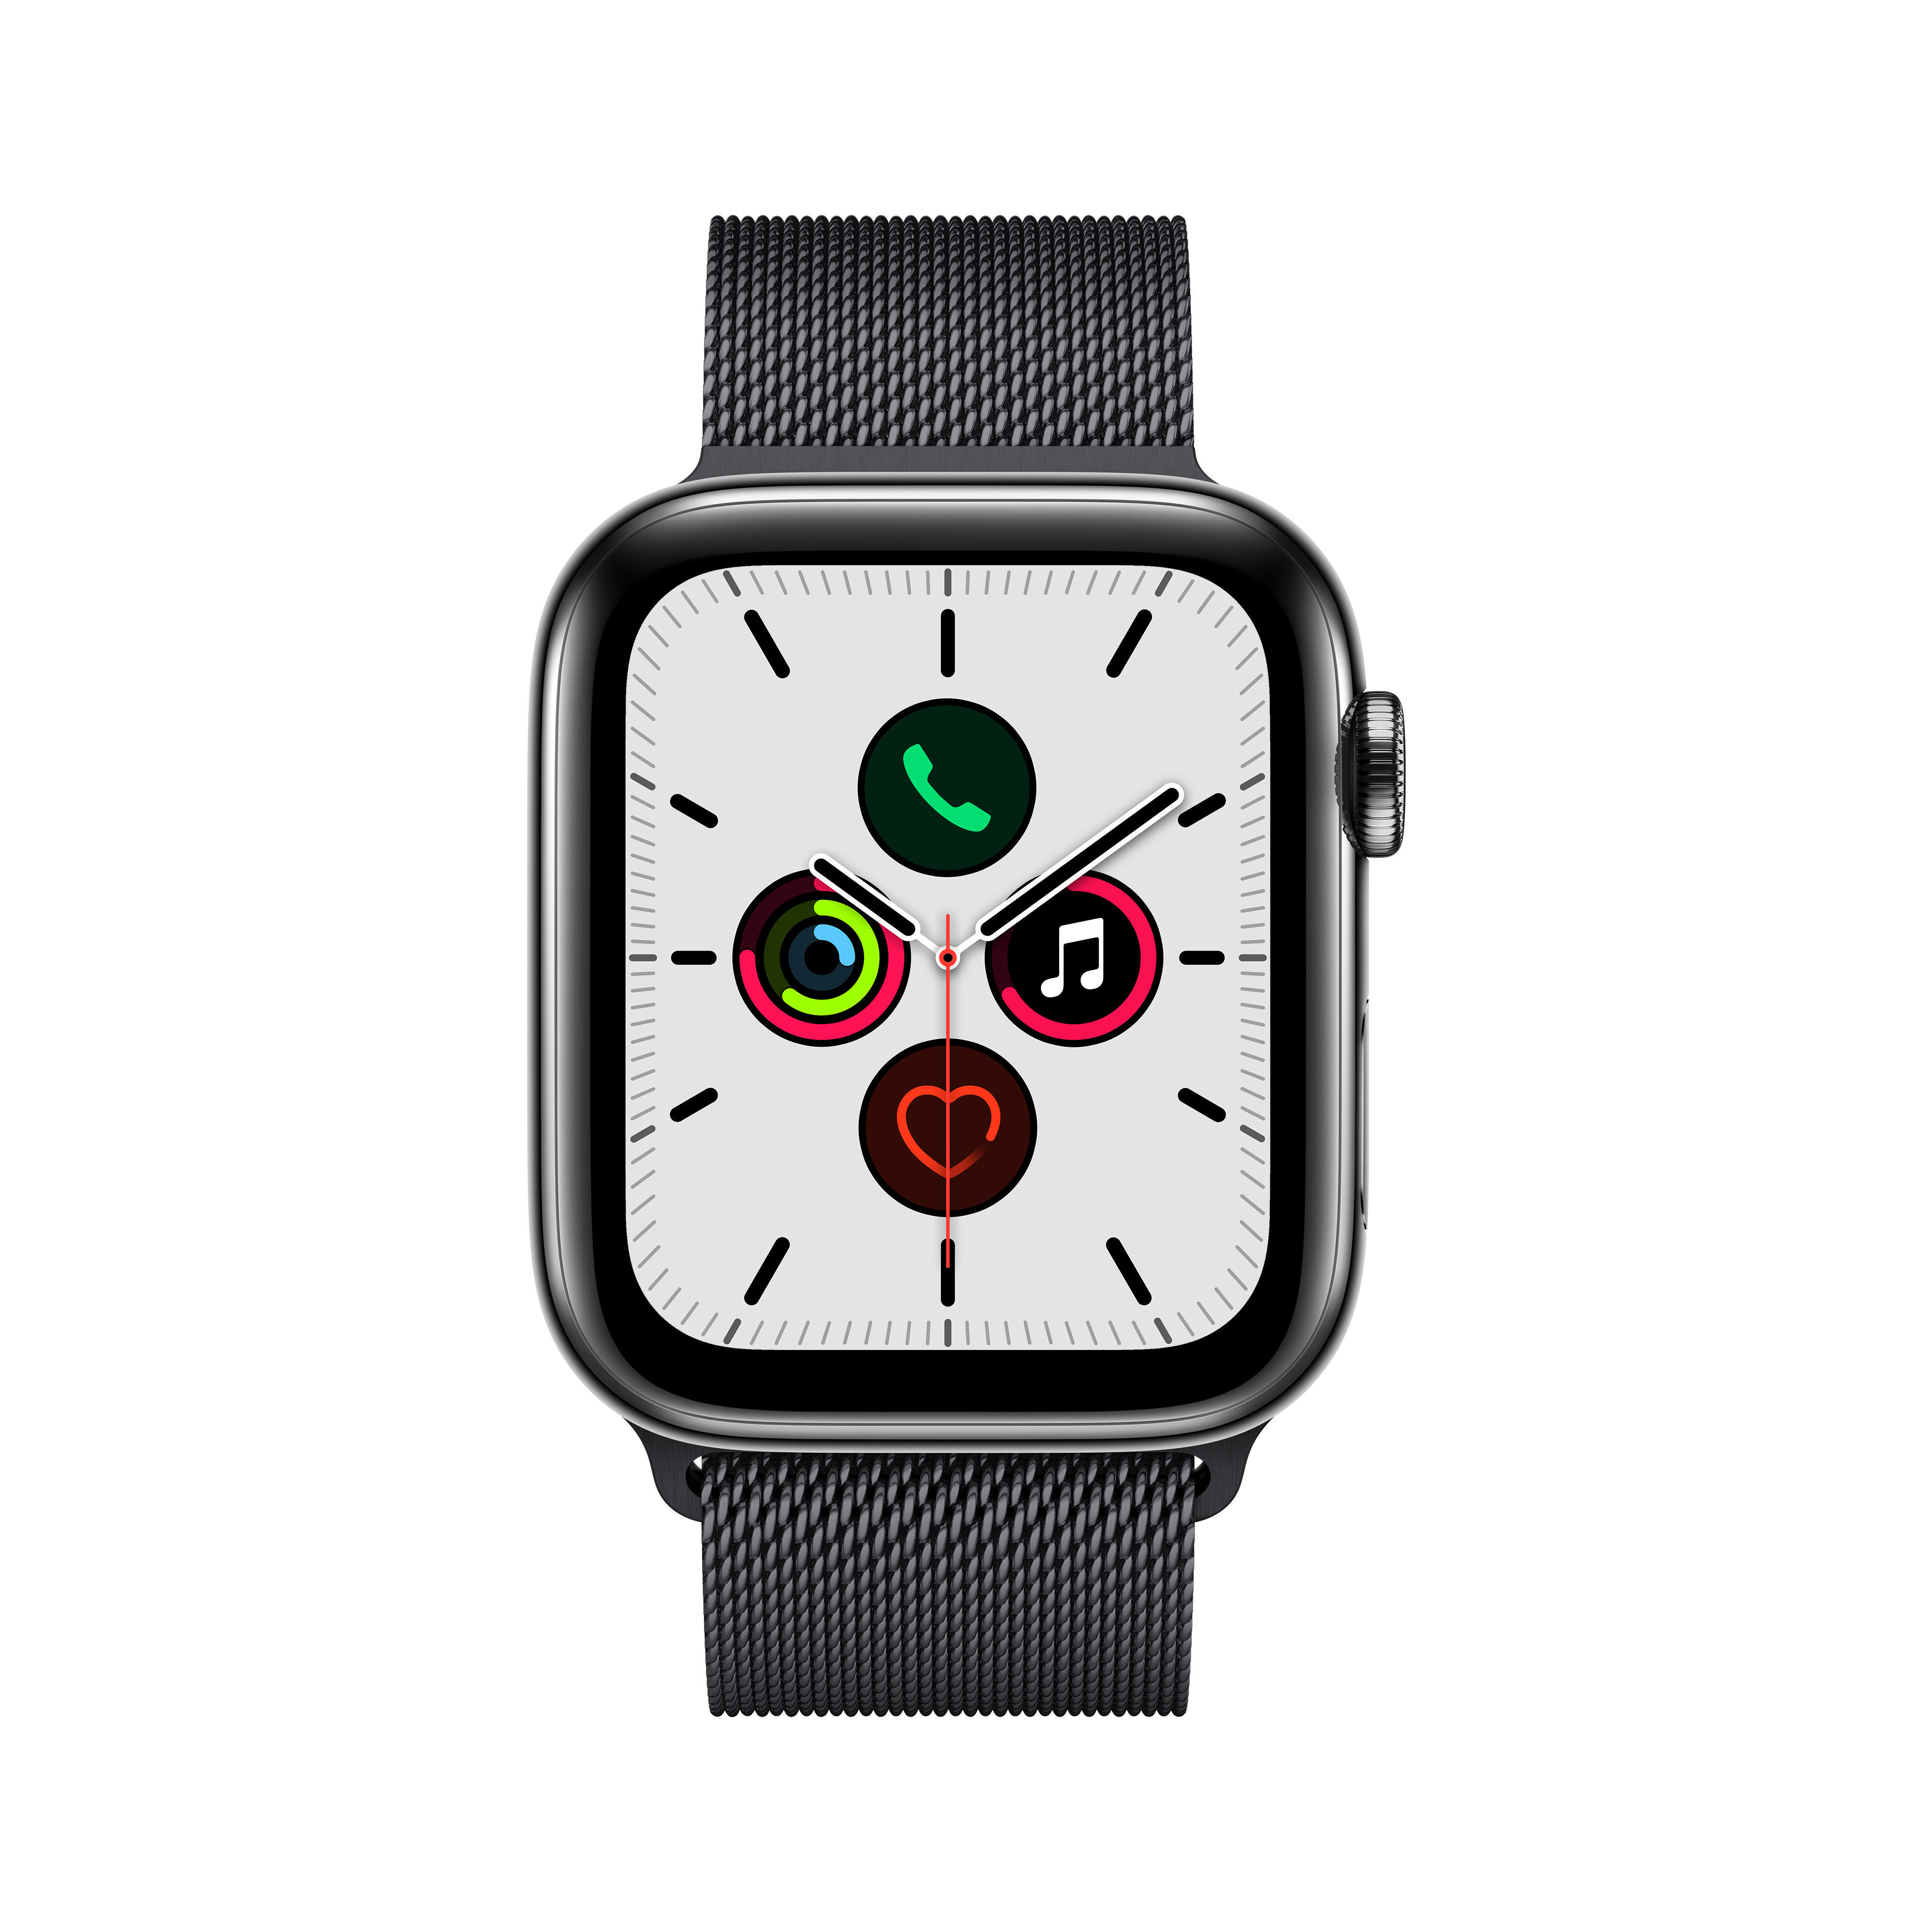 5 Edelstahl 44mm (GPS Schwarz APPLE Series mm Smartwatch Armband: Edelstahl, - Edelstahl Gehäuse: Schwarz 140 Milanaise, , + 200 Cellular) Watch